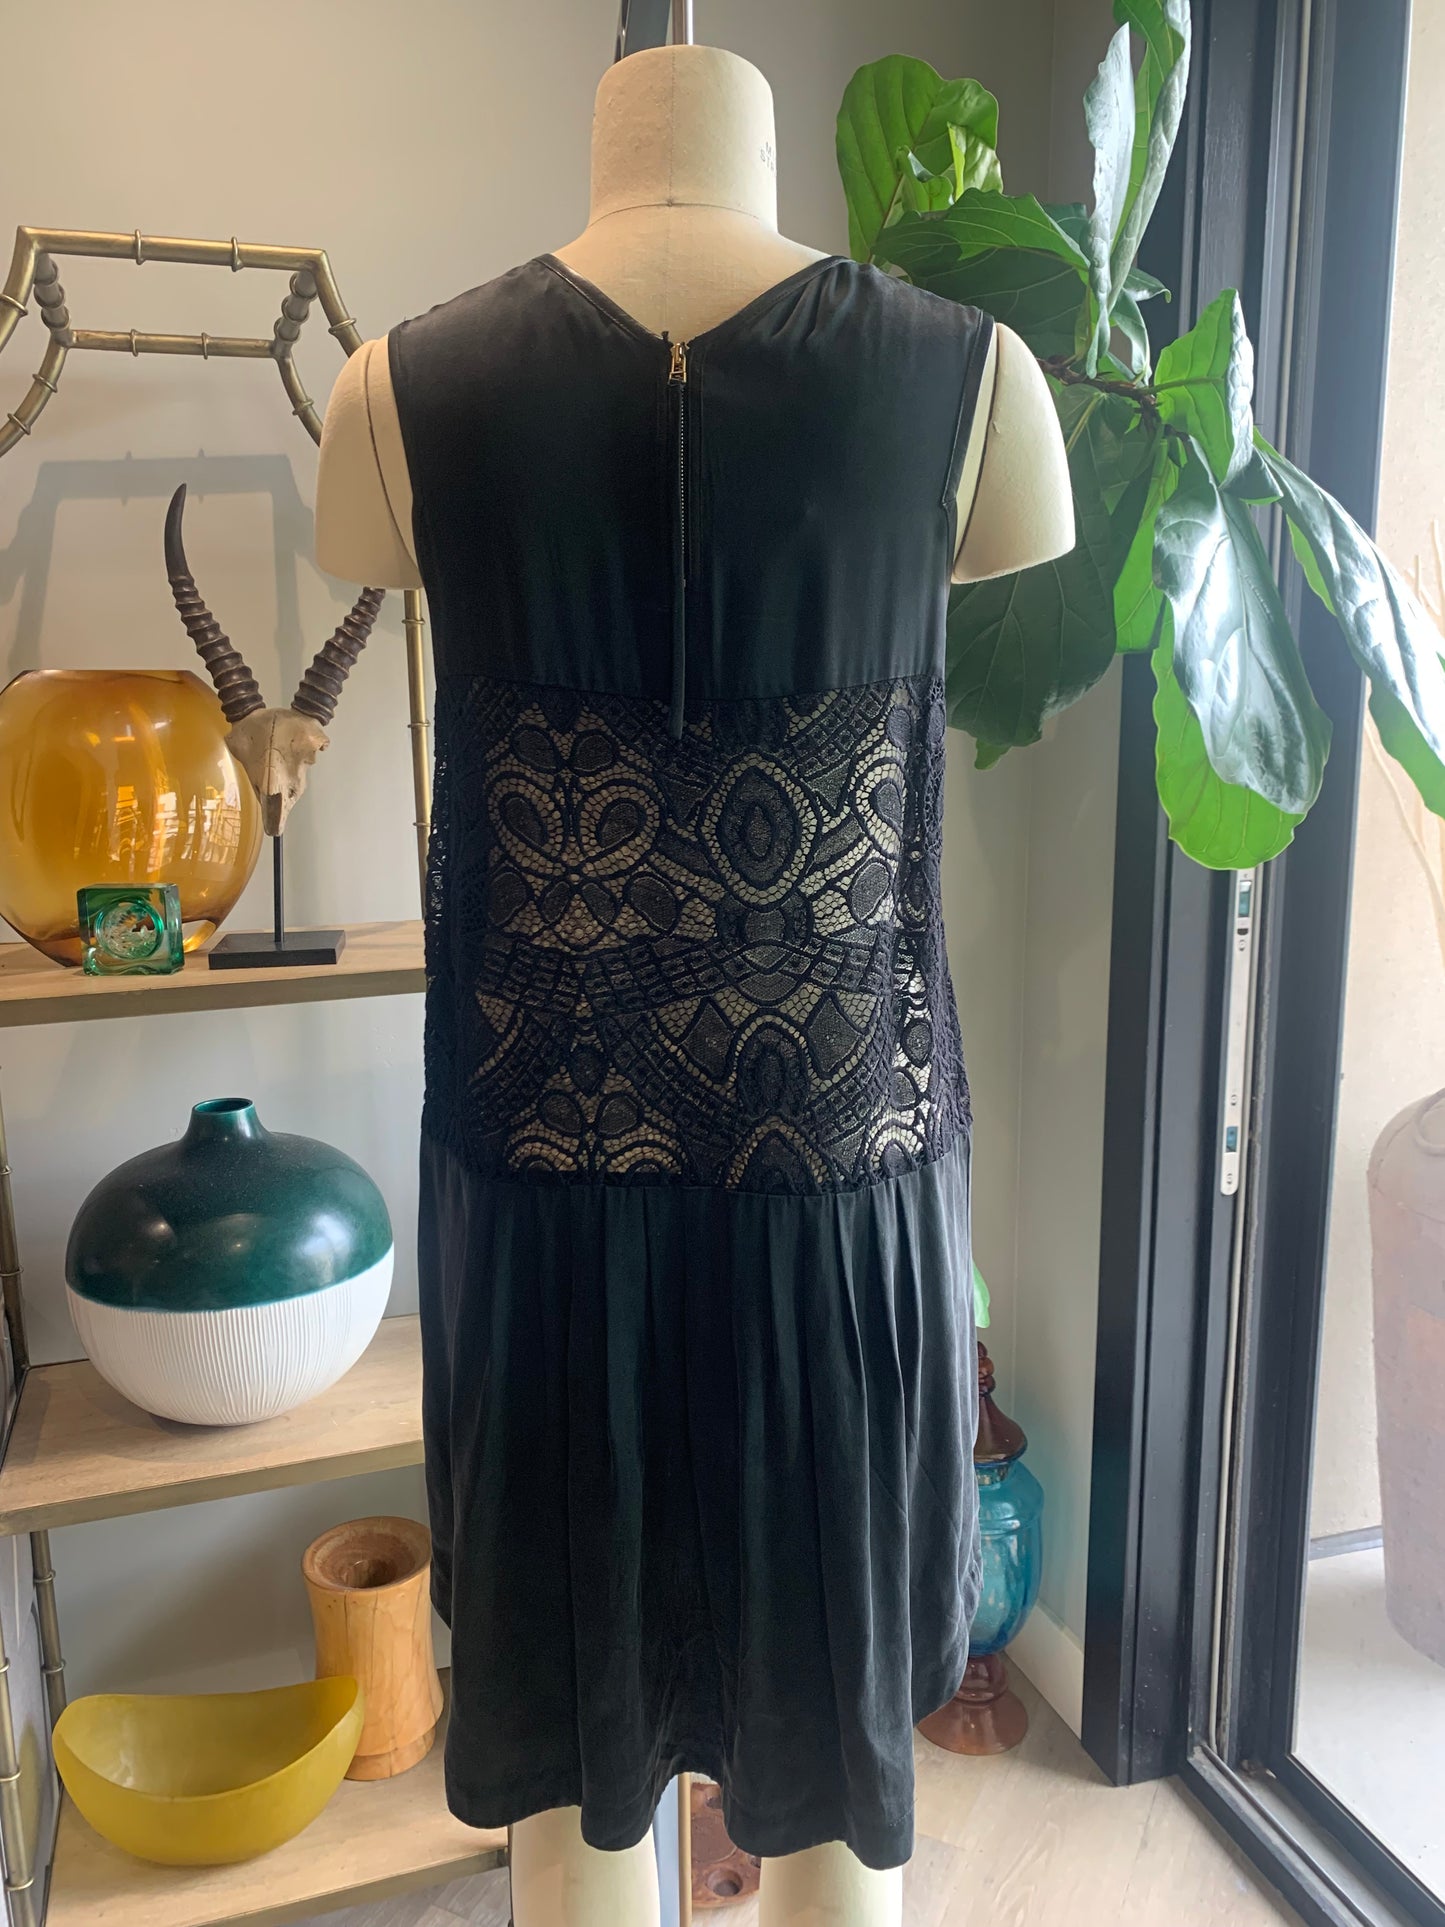 Rear View Of Black Sleeveless Dress